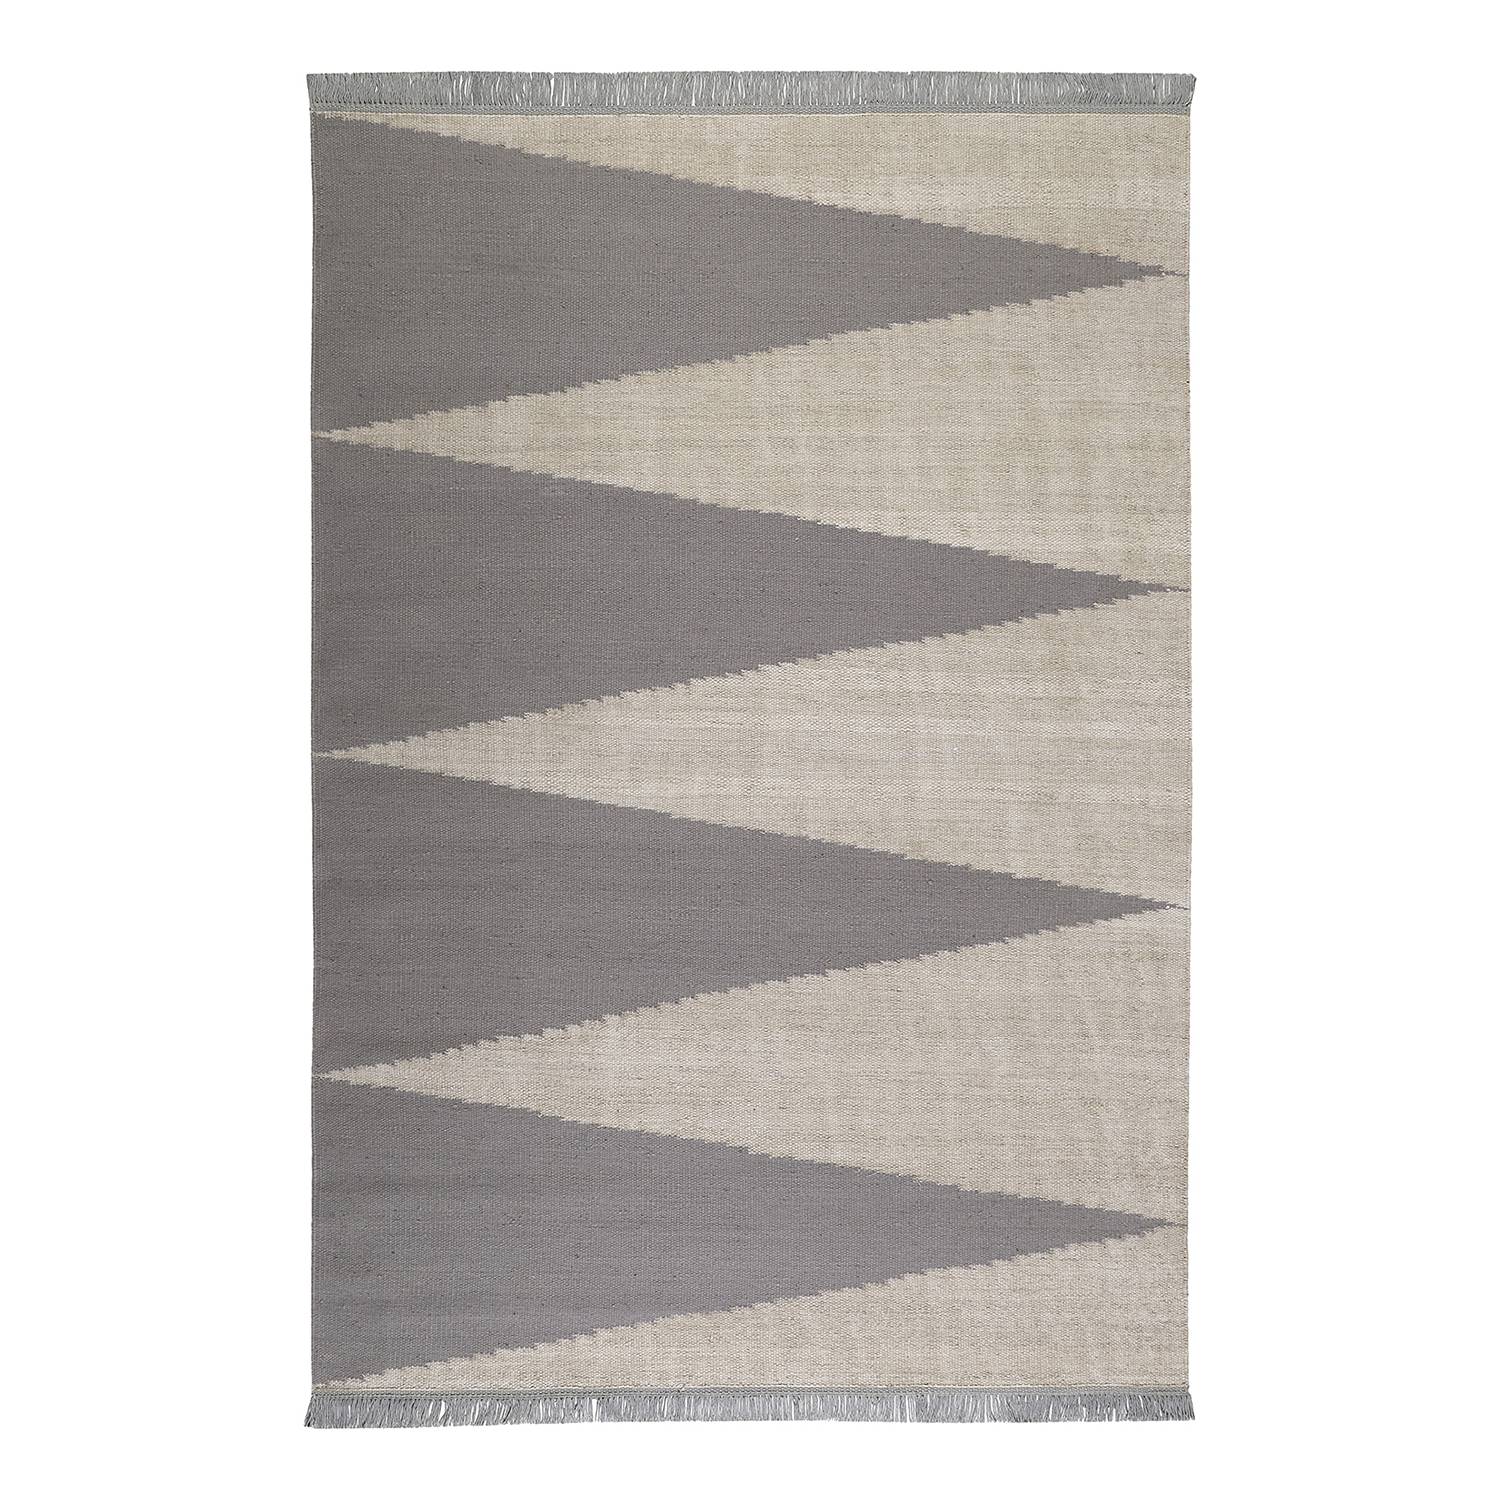 Teppich Smart Triangle (handgewebt) - Mischgewebe - Grau / Creme - 160 x 230 cm, carpets&co